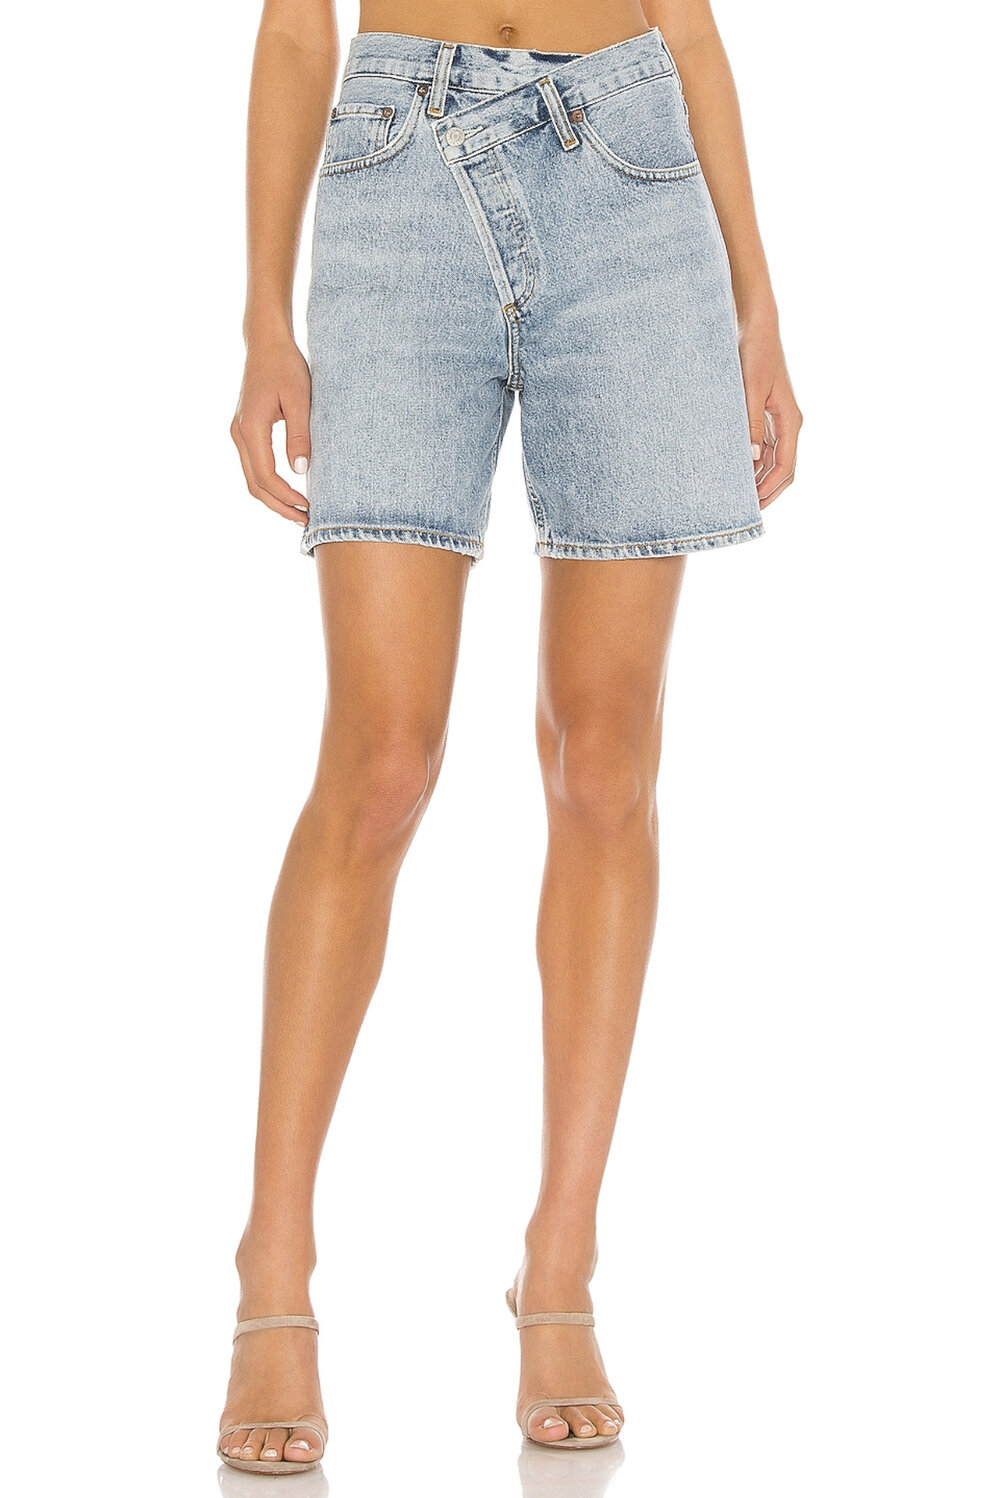 $214, Agolde Shorts